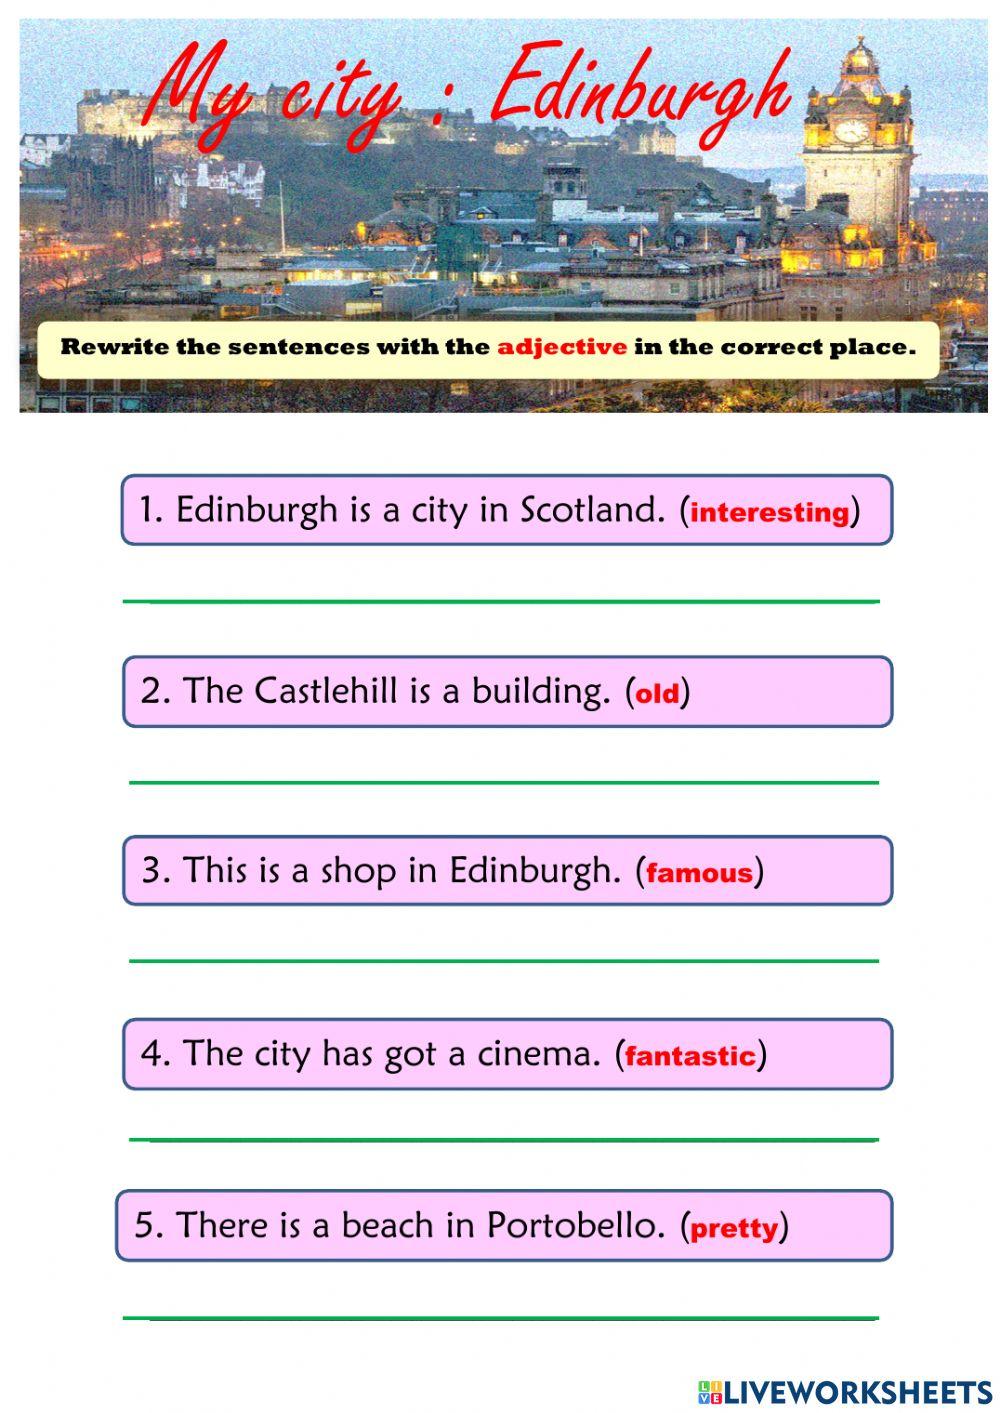 My city : Edinburgh